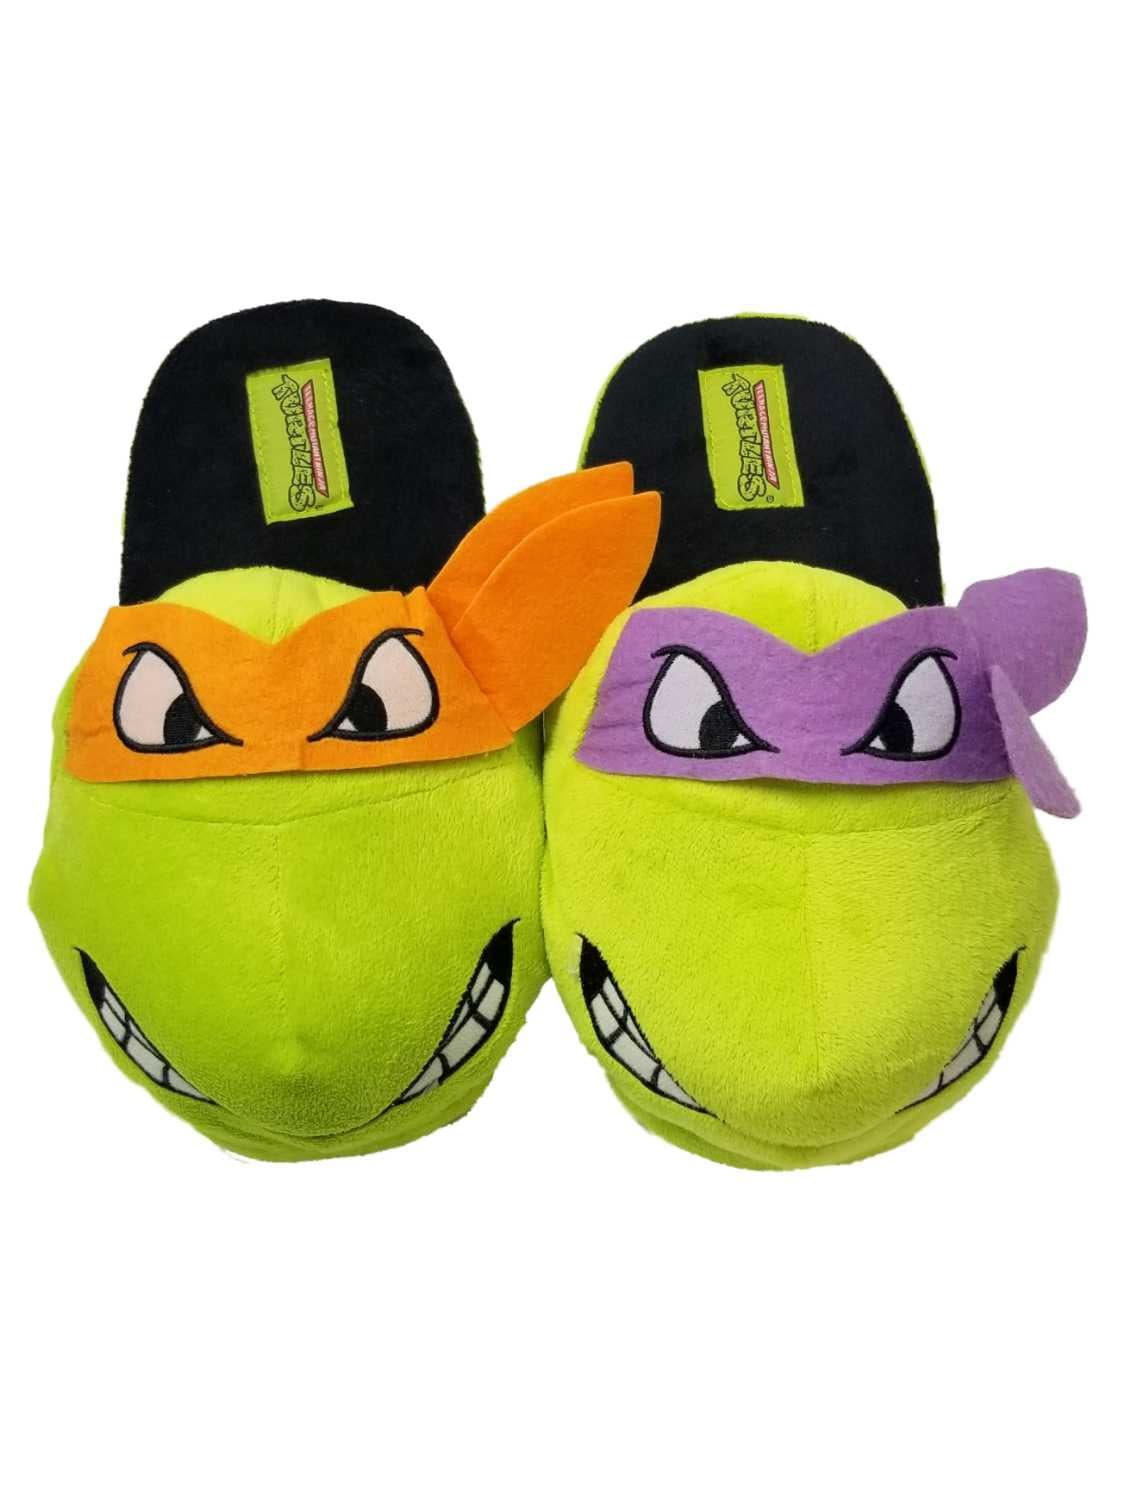 ninja turtle house shoes